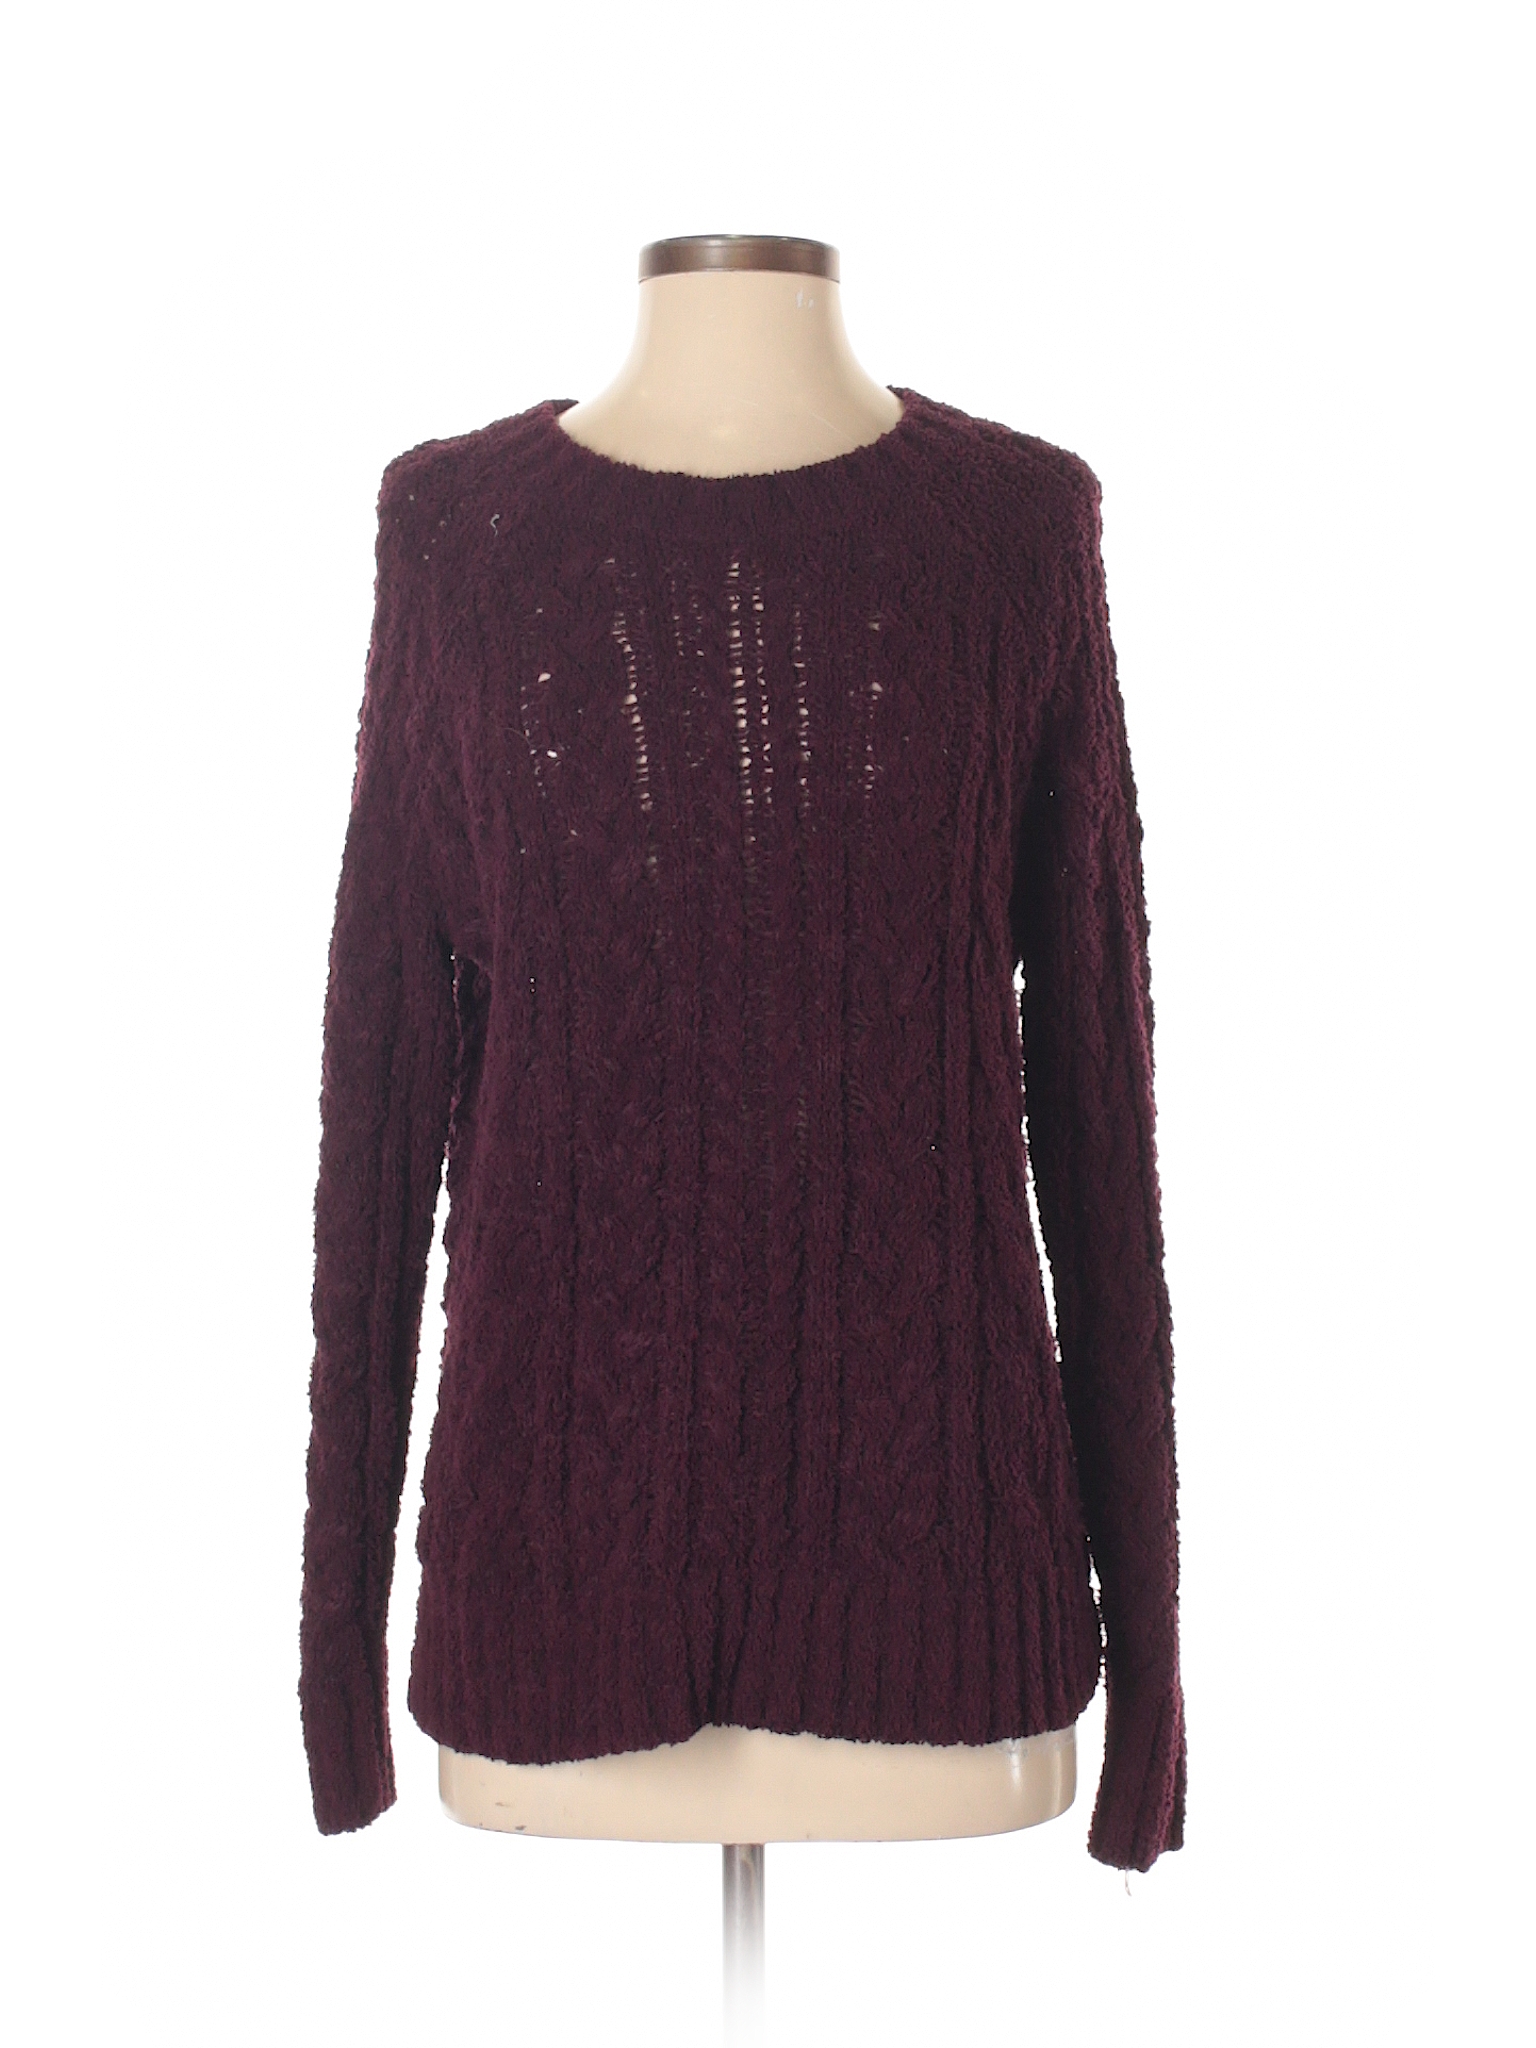 LA Hearts Crochet Burgundy Pullover Sweater Size S - 89% off | thredUP